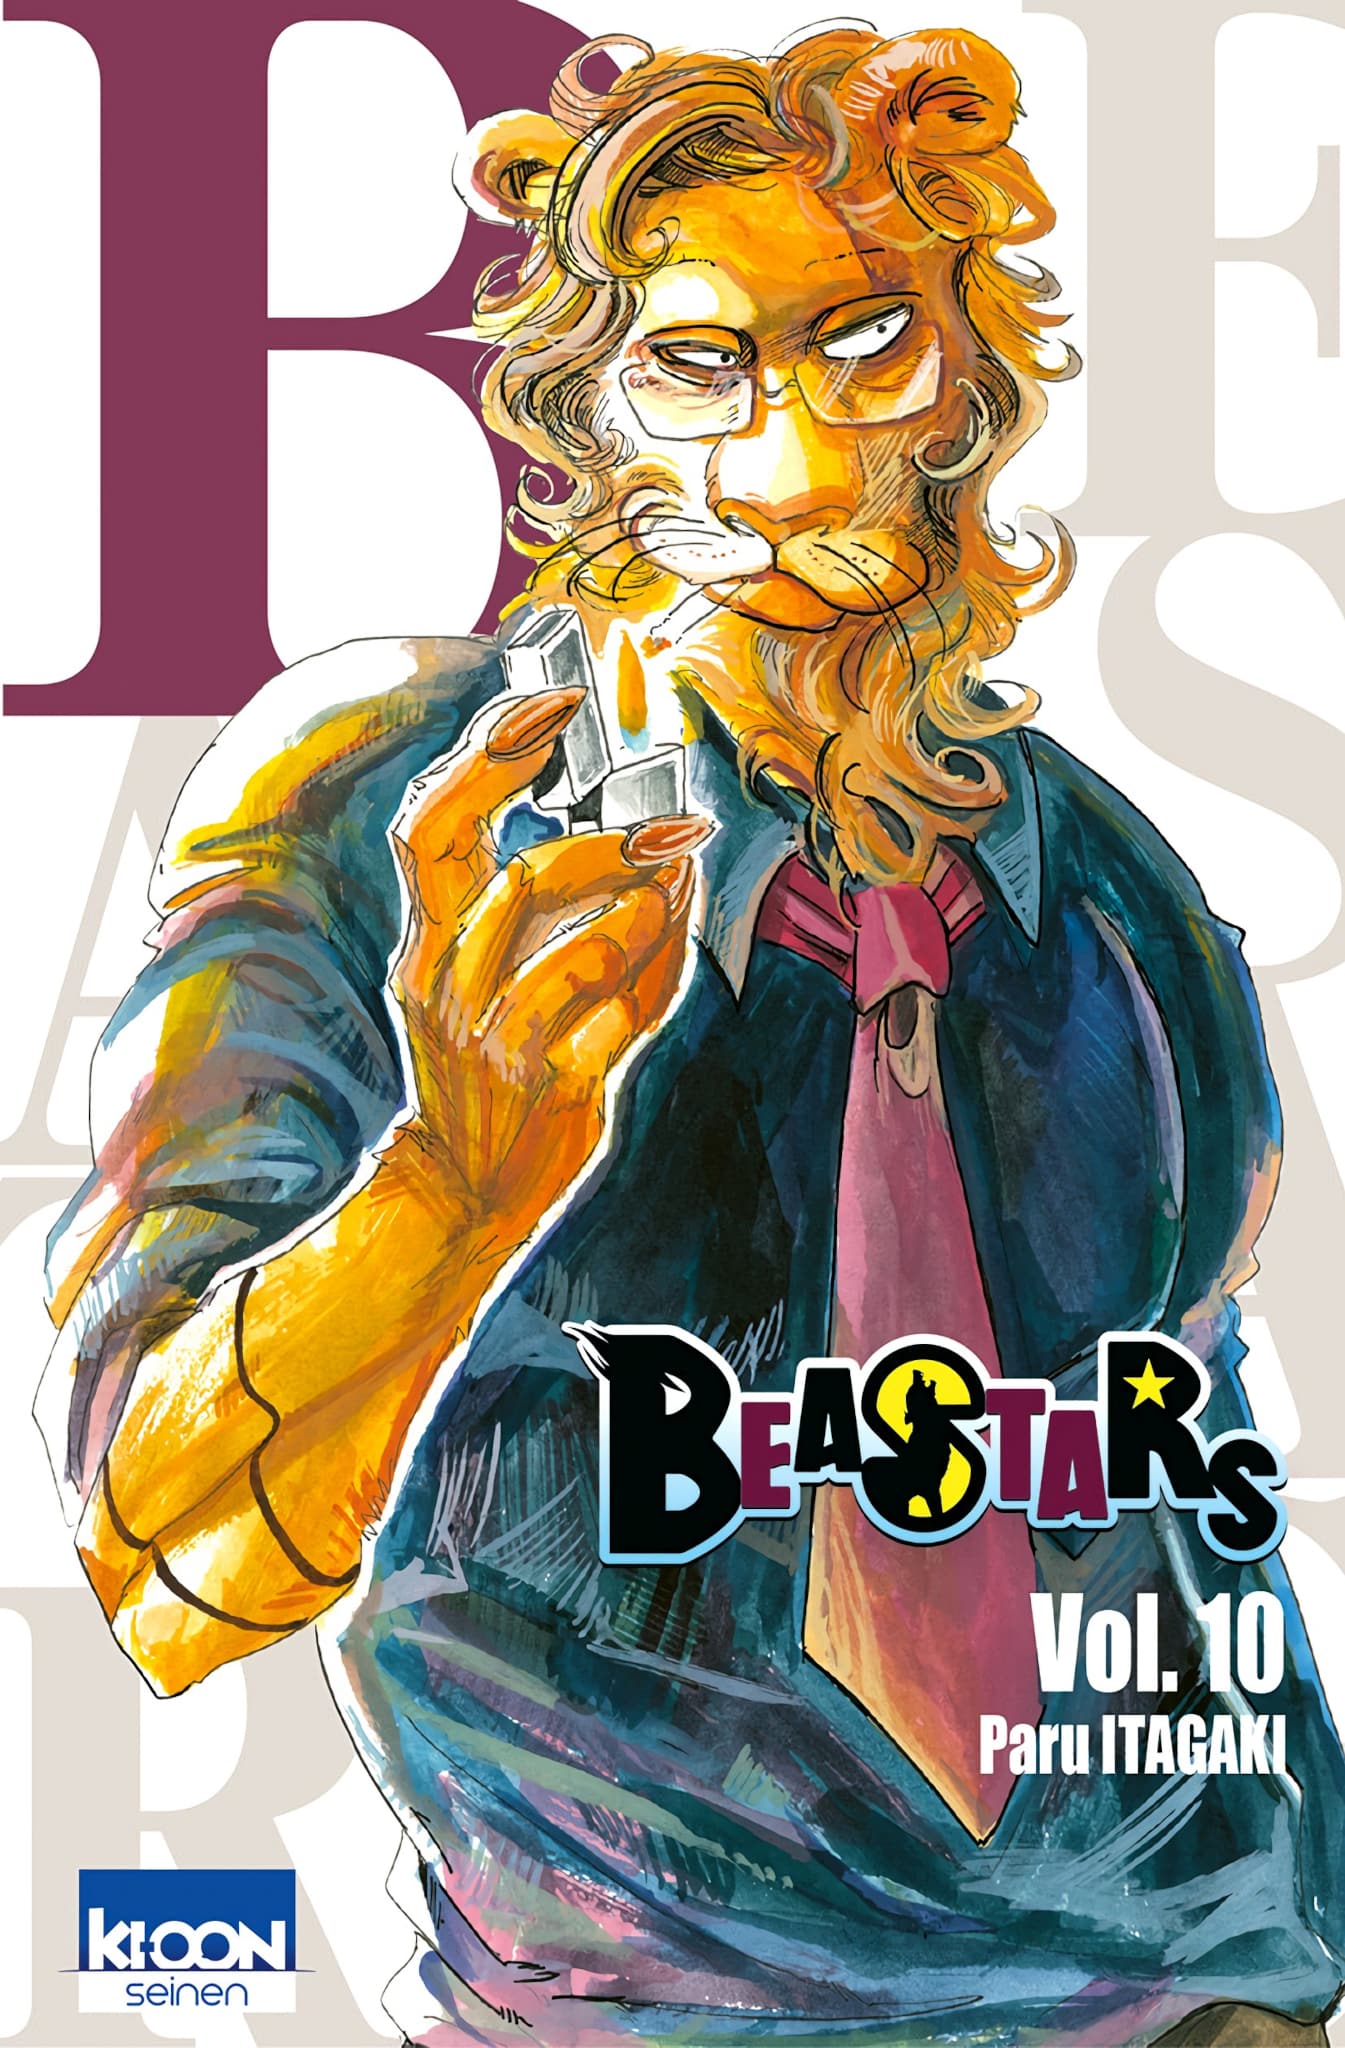 Tome 10 du manga Beastars